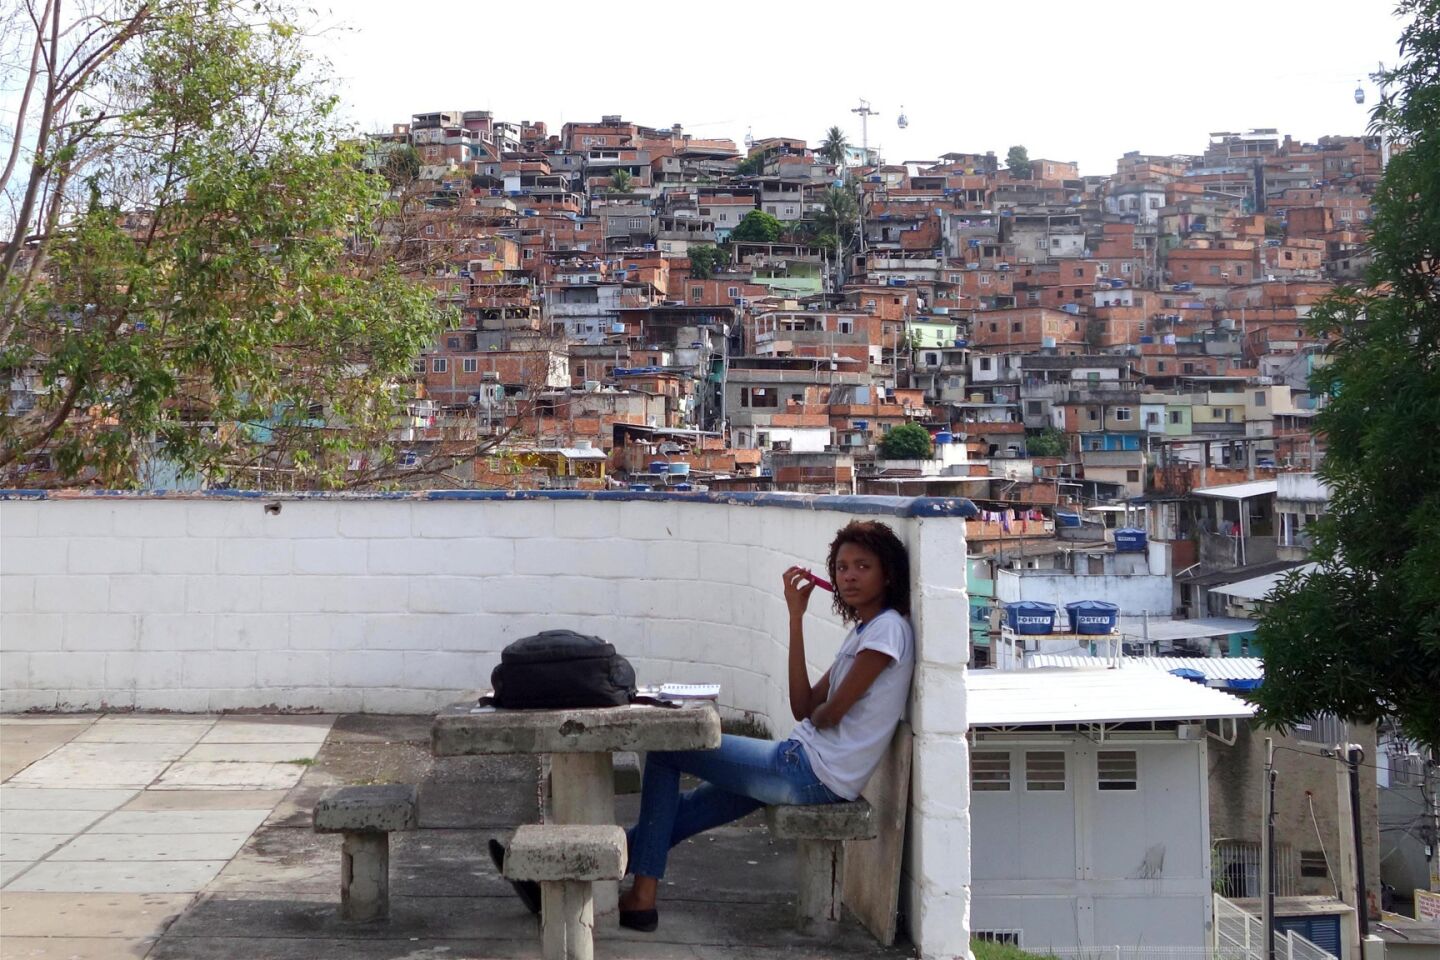 Favela student